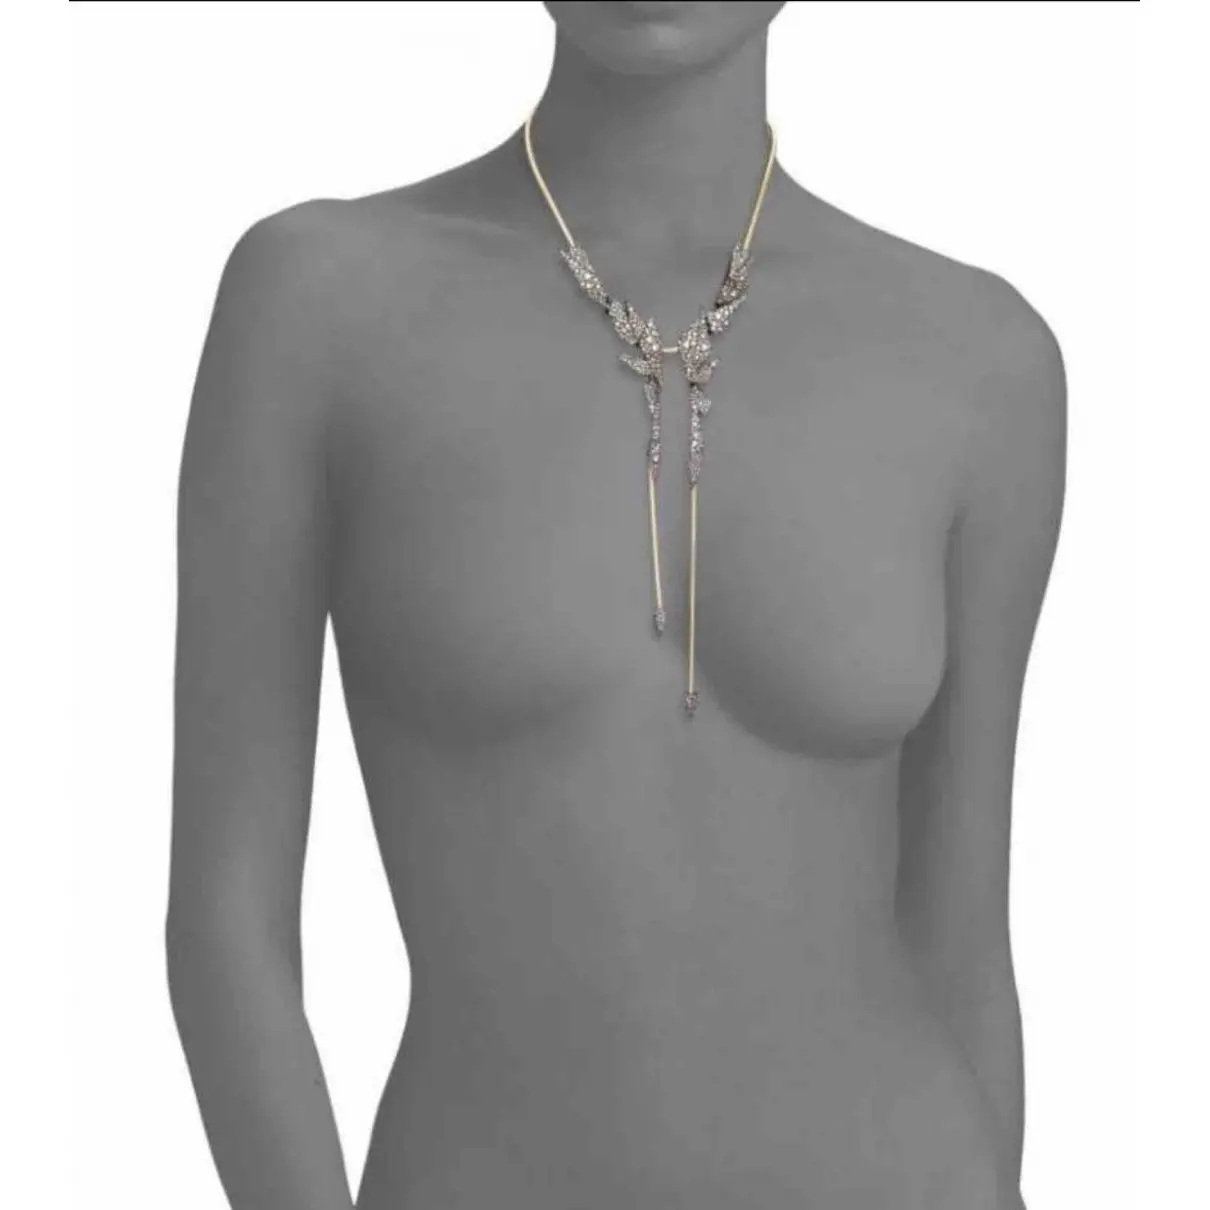 Luxury Alexis Bittar Necklaces Women